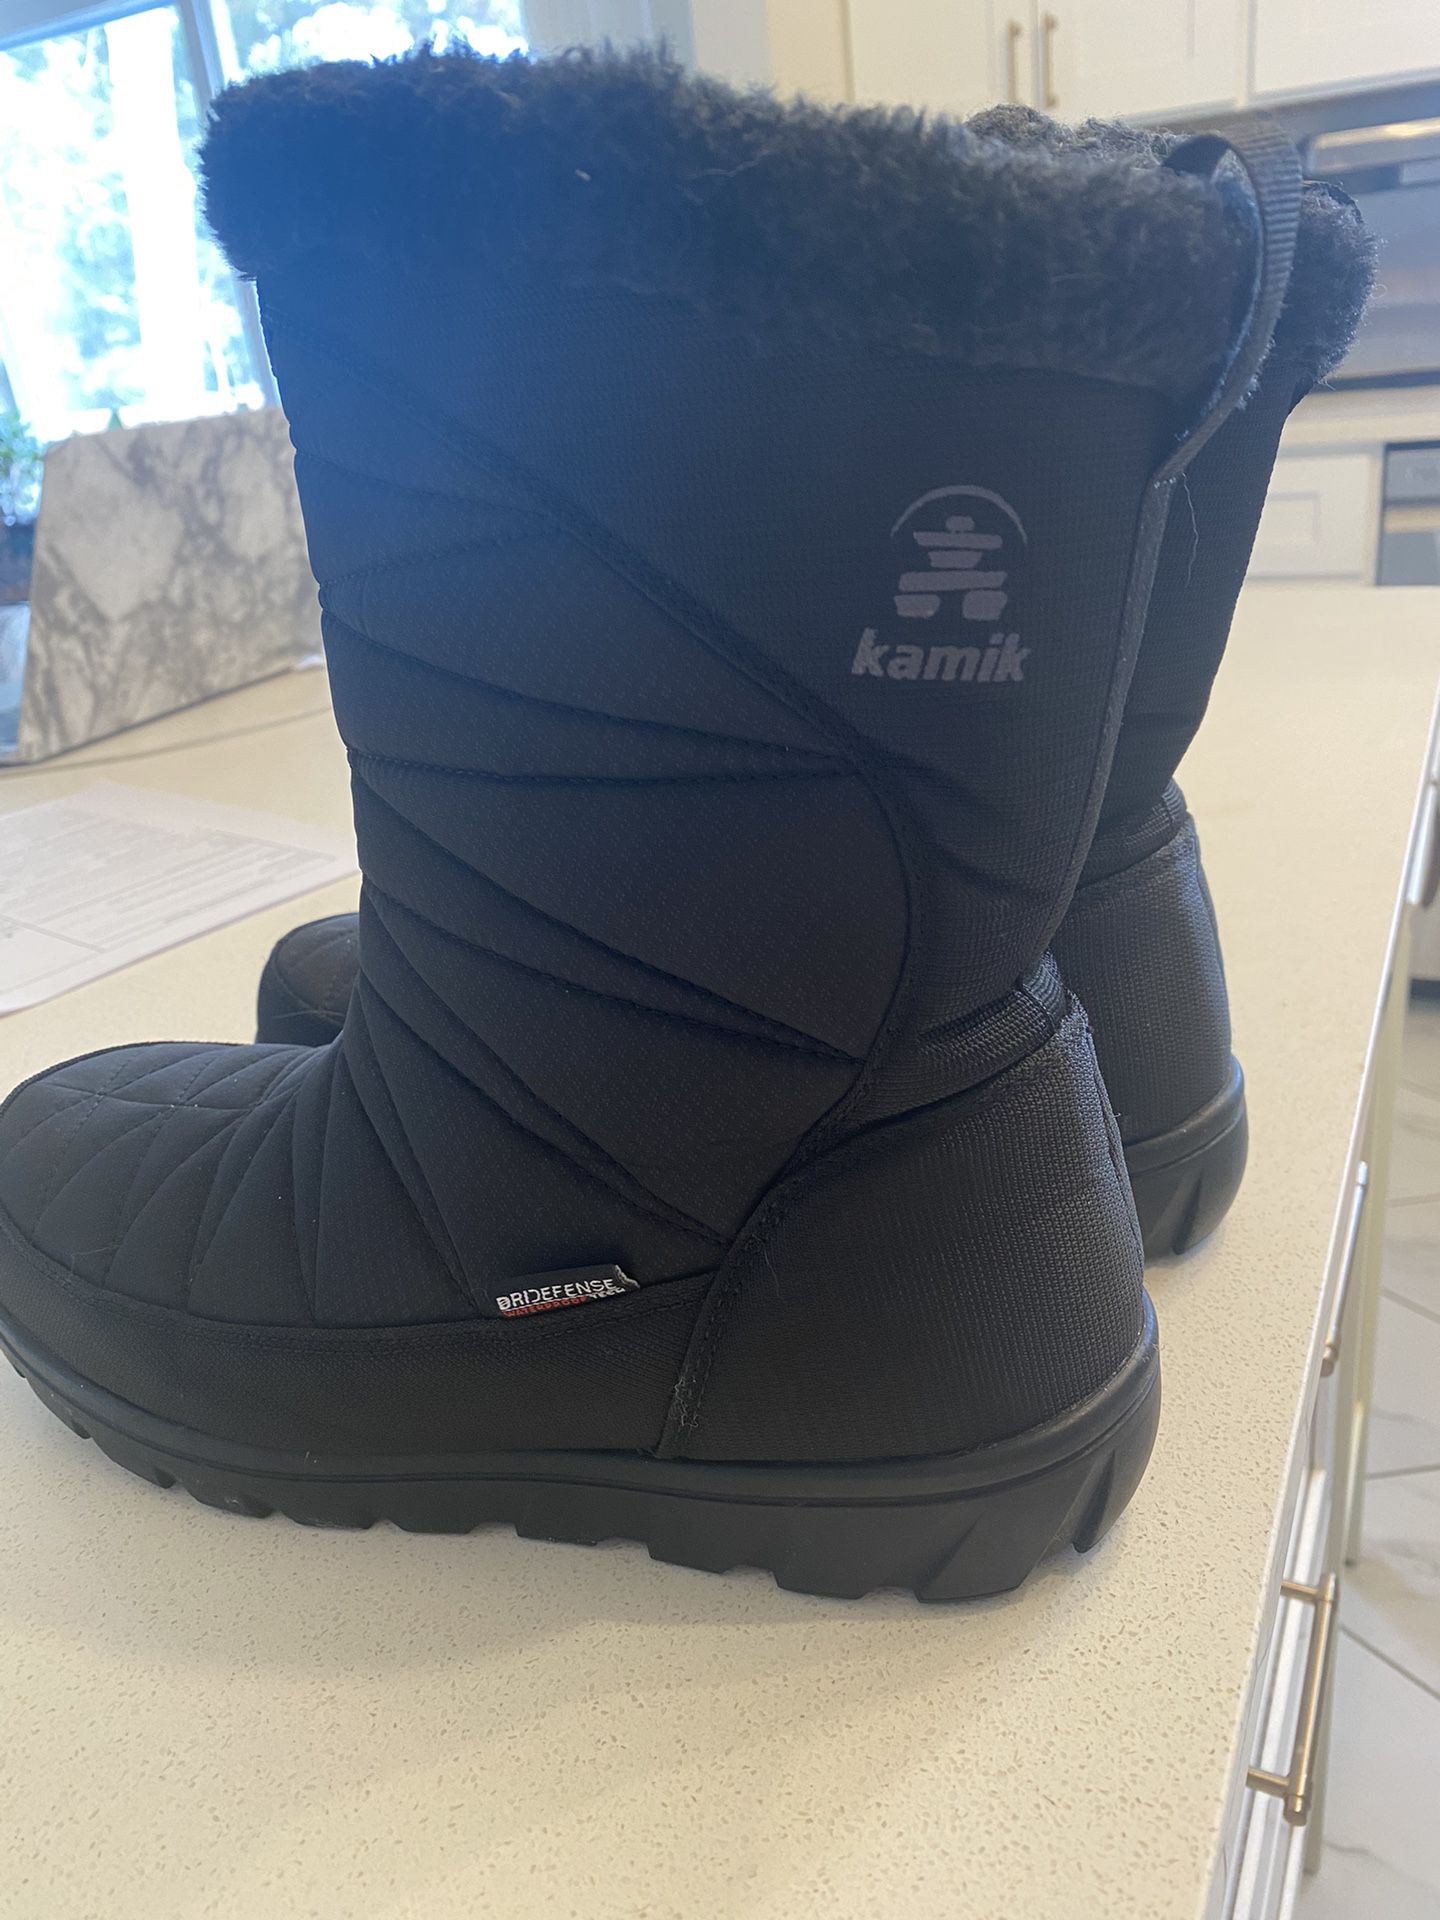 Women’s Kamik snow boots (Size 9)